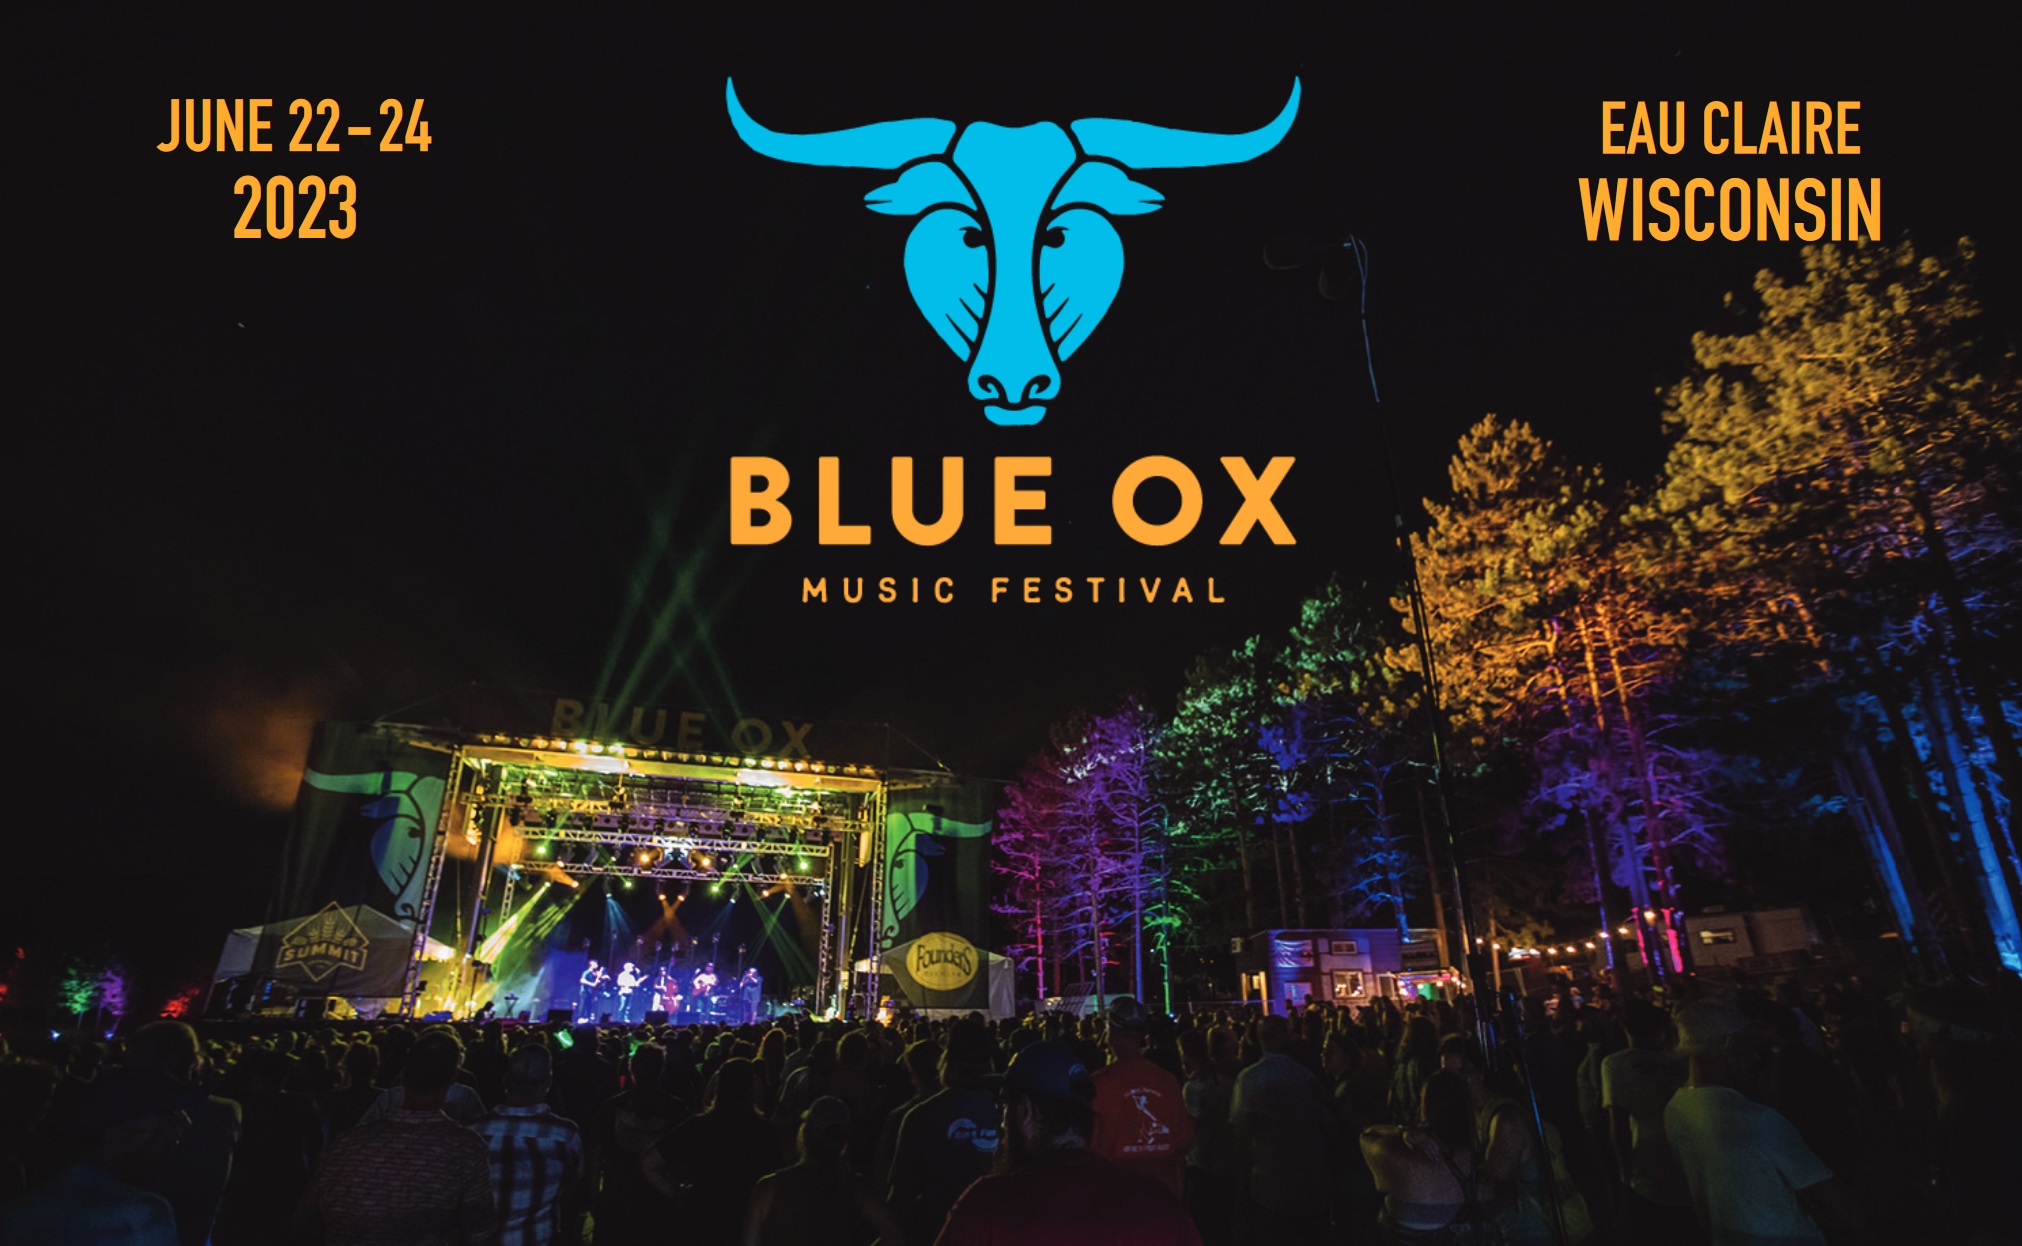 BLUE OX MUSIC FESTIVAL ANNOUNCES ITS ARTIST LINEUP FOR 2023